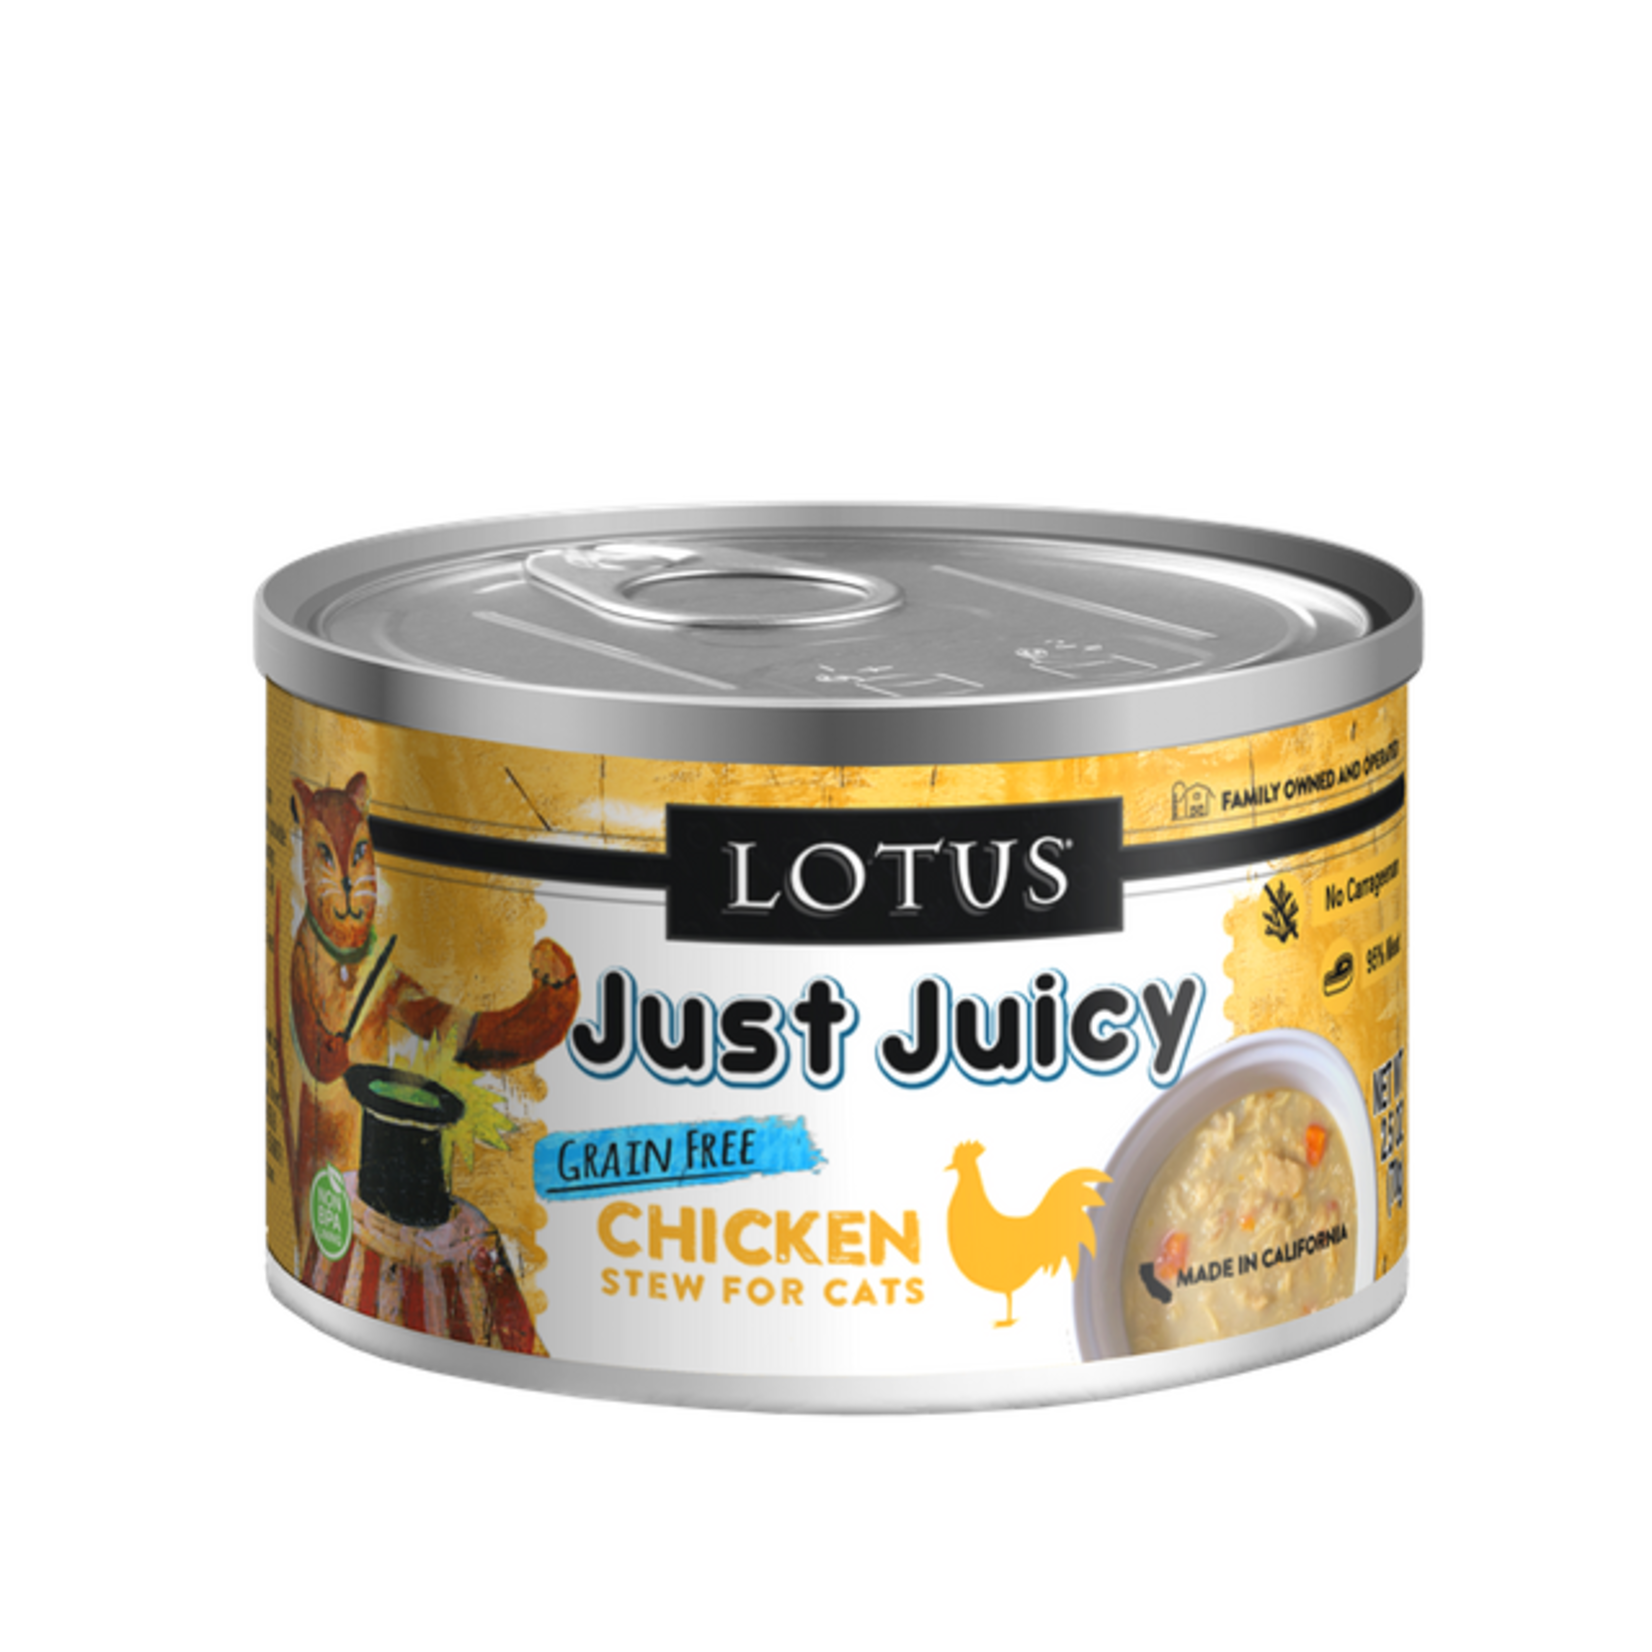 Lotus Wet Cat Food Just Juicy Chicken Stew for Cats 2.5oz Grain Free